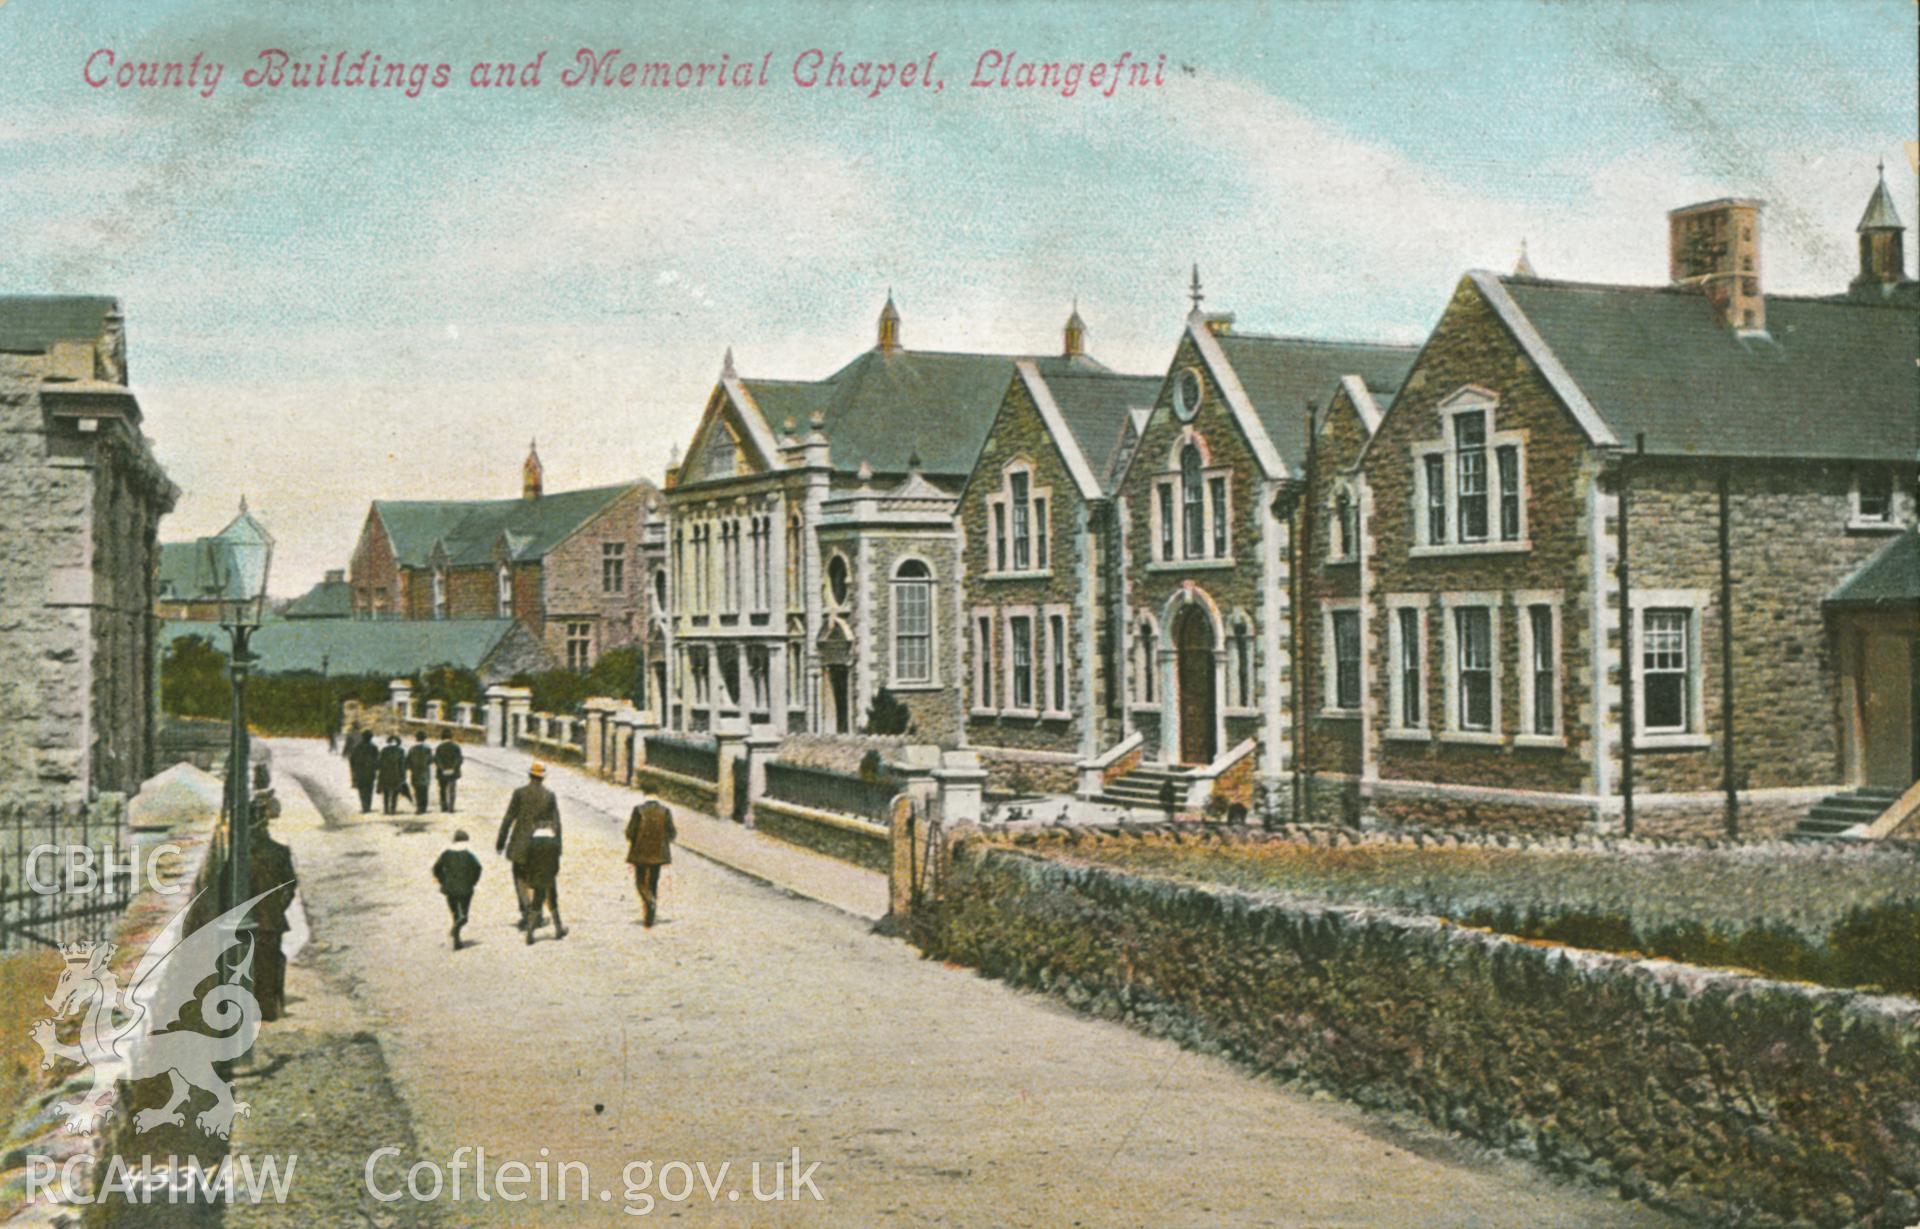 Moriah Chapel, Llangefni; pre 1924 colour postcard showing County Buildings and Memorial Chapel, Llangefni.